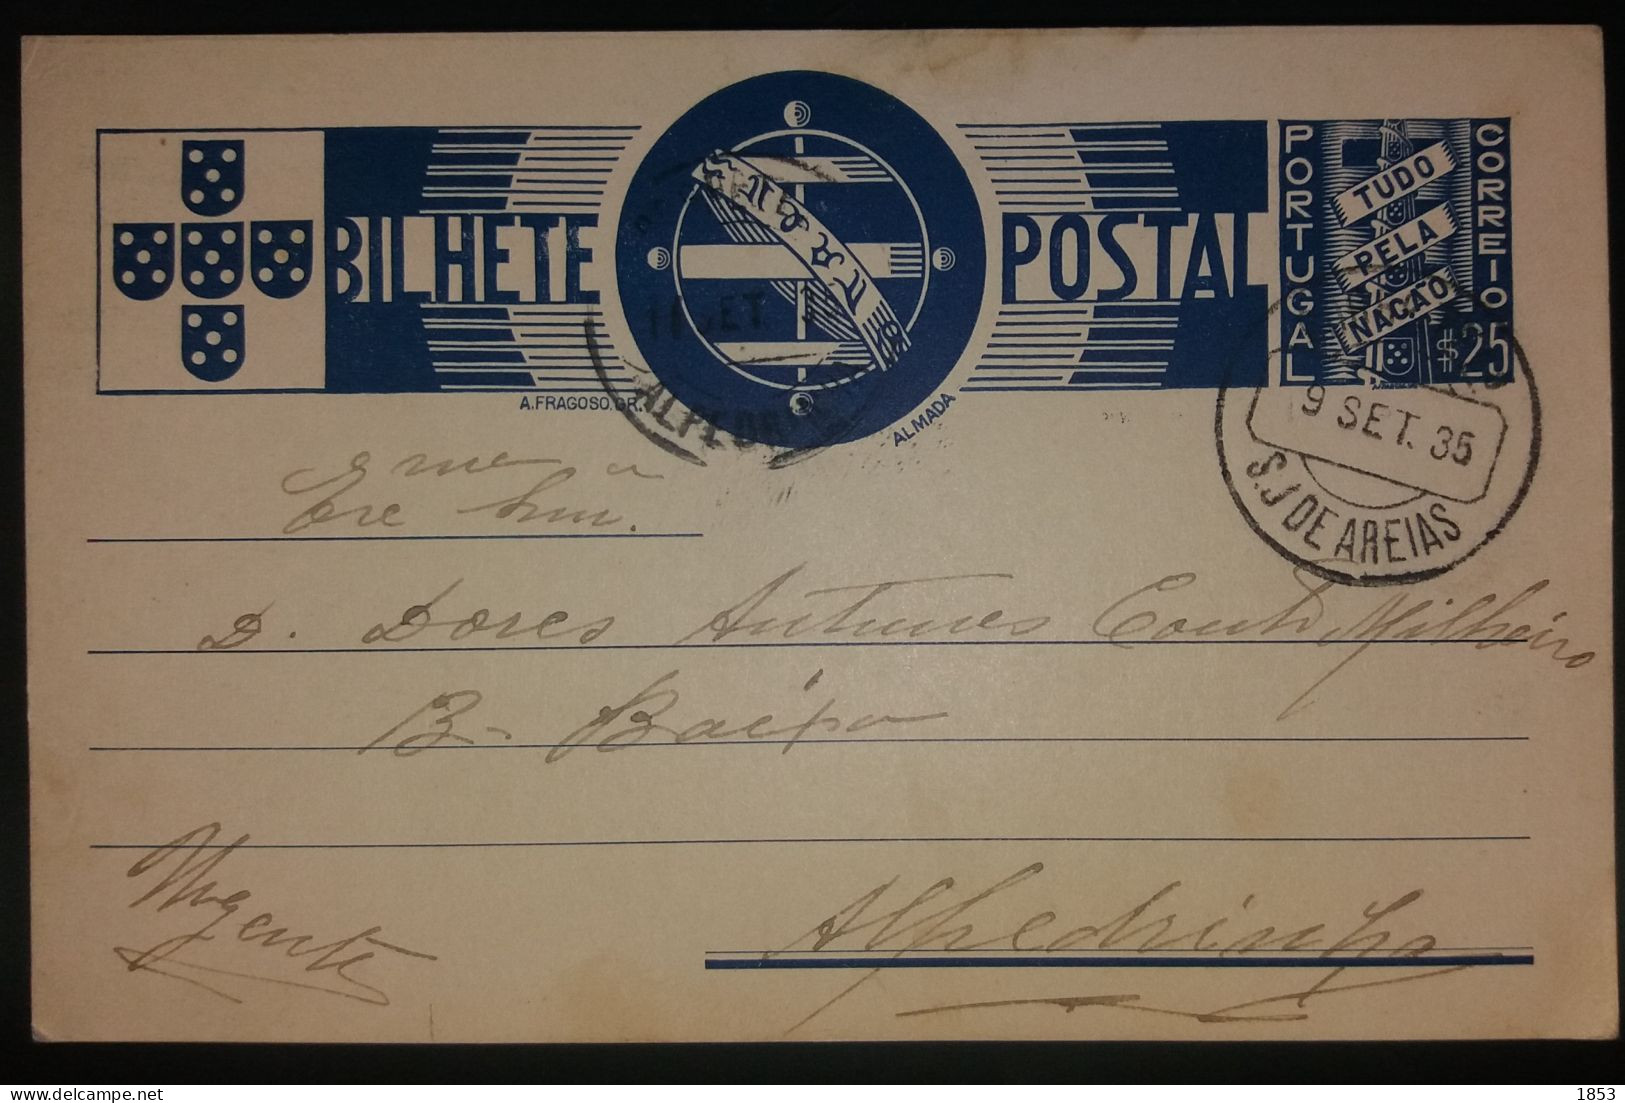 BILHETE POSTAL - TUDO PELA NAÇÂO - MARCOFILIA - S.J DE AREIAS - Postmark Collection